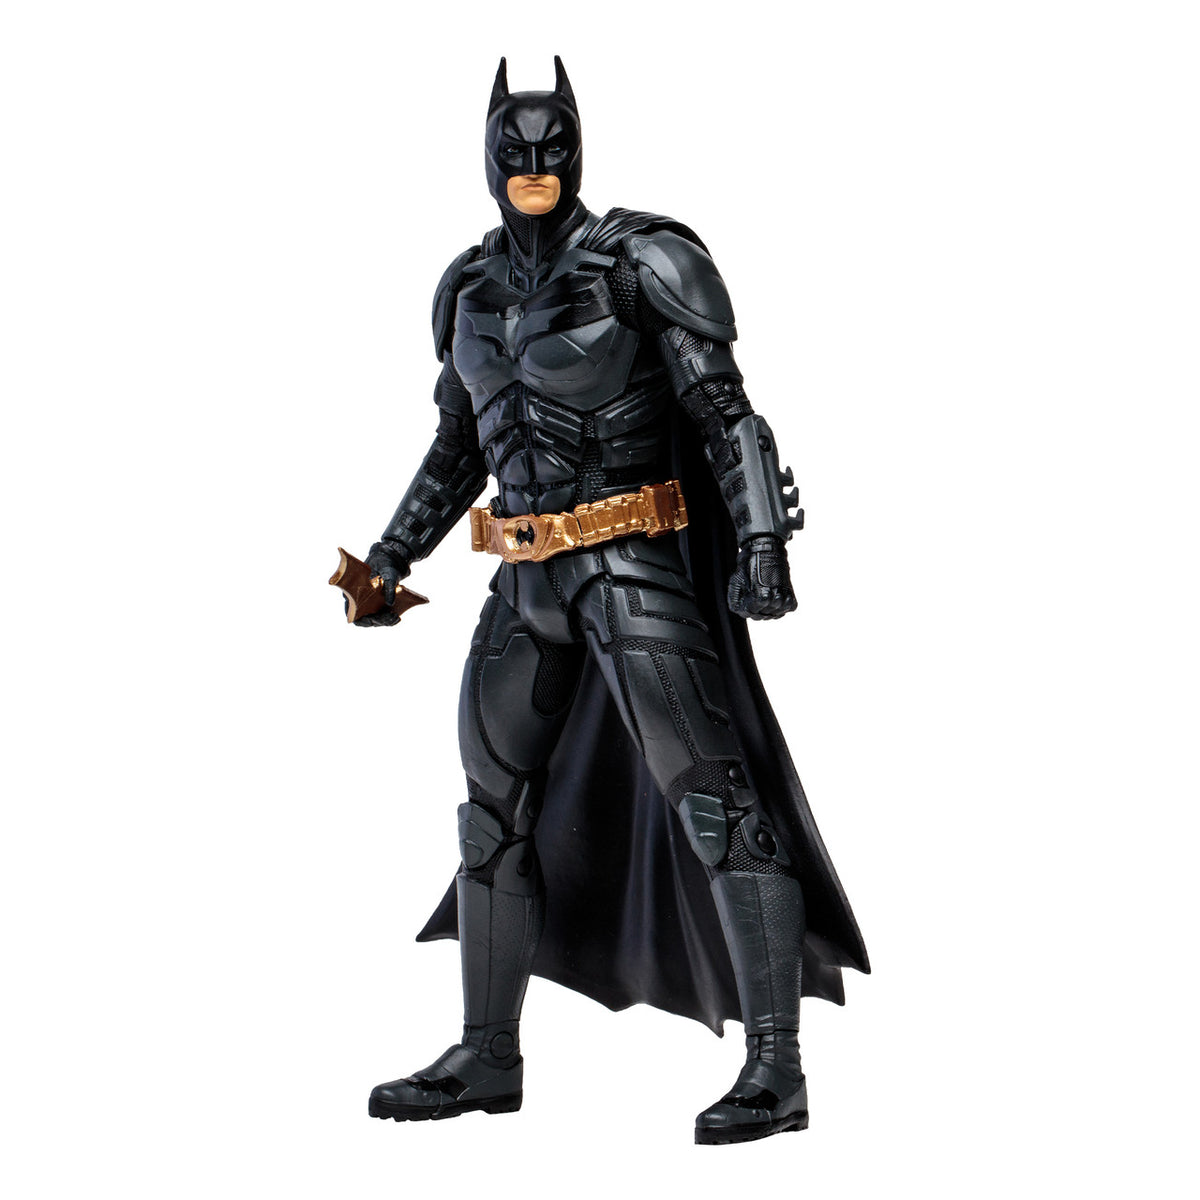 Batman (The Dark Knight Trilogy) 7&quot; Build-A-Figure Series Bane Action Figure by McFarlane Toys -McFarlane Toys - India - www.superherotoystore.com